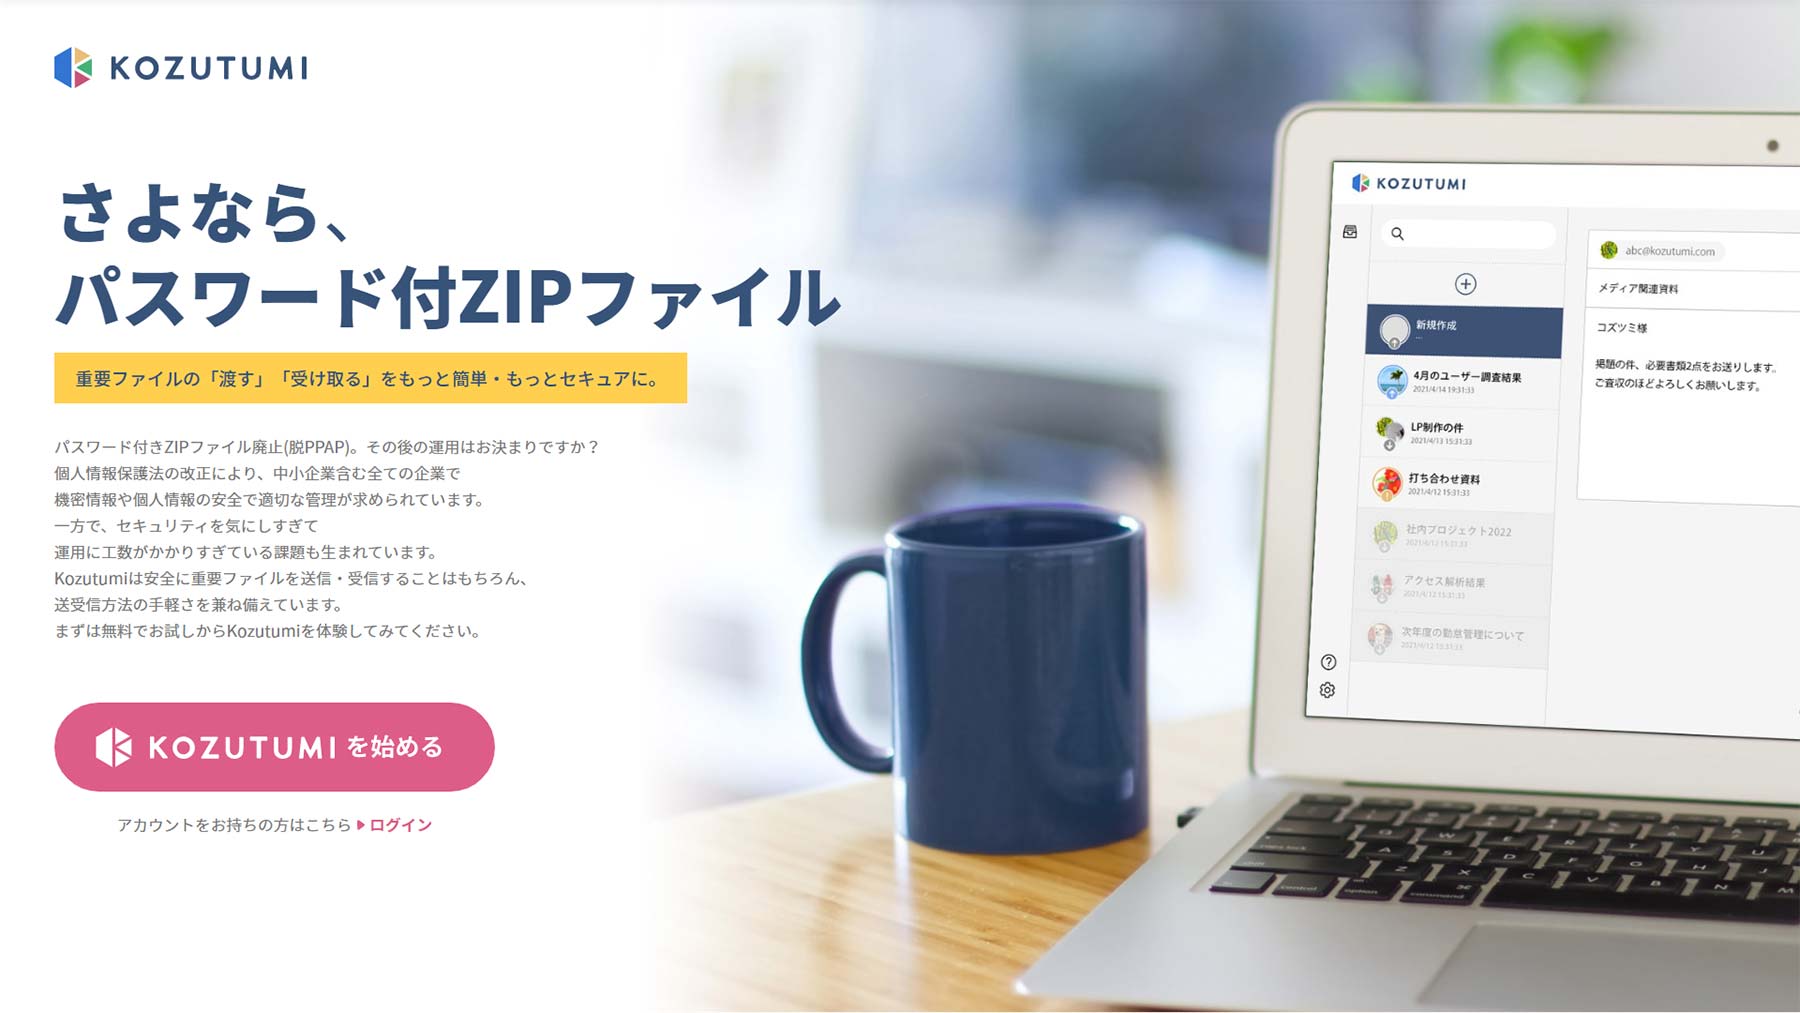 Kozutumi公式Webサイト